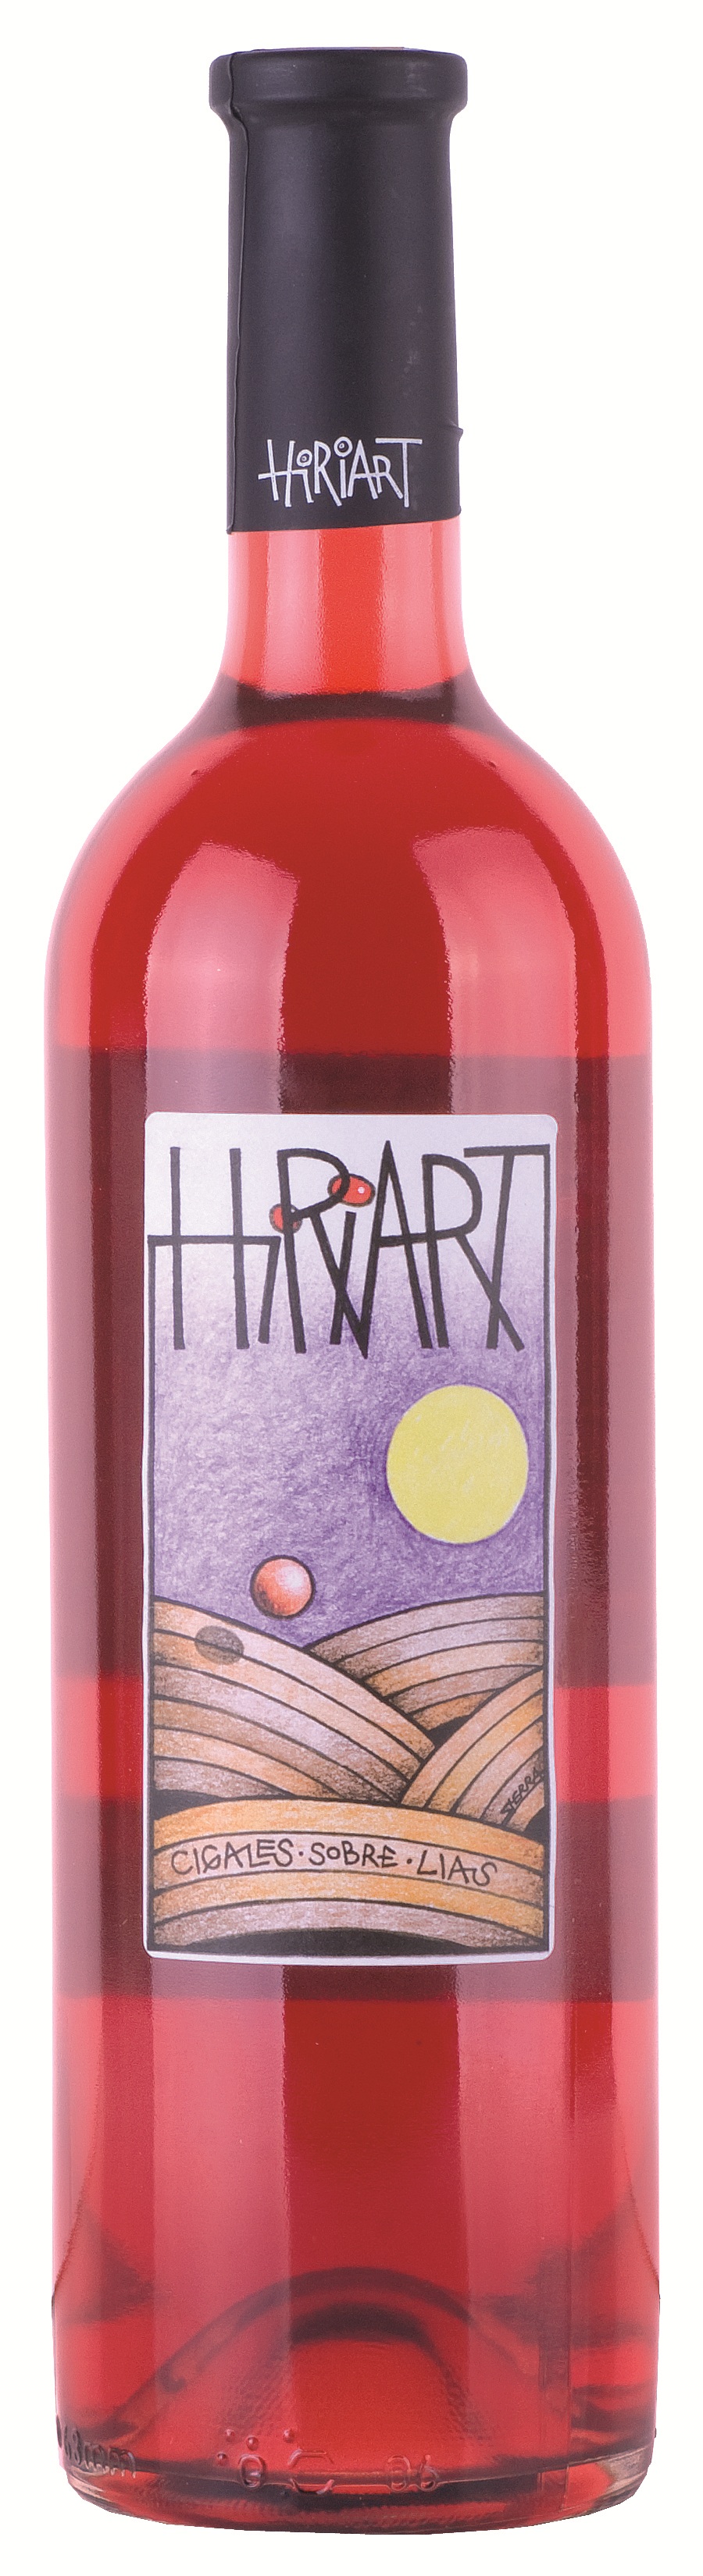 Image of Wine bottle Hiriart Rosado Fermentado en Barrica